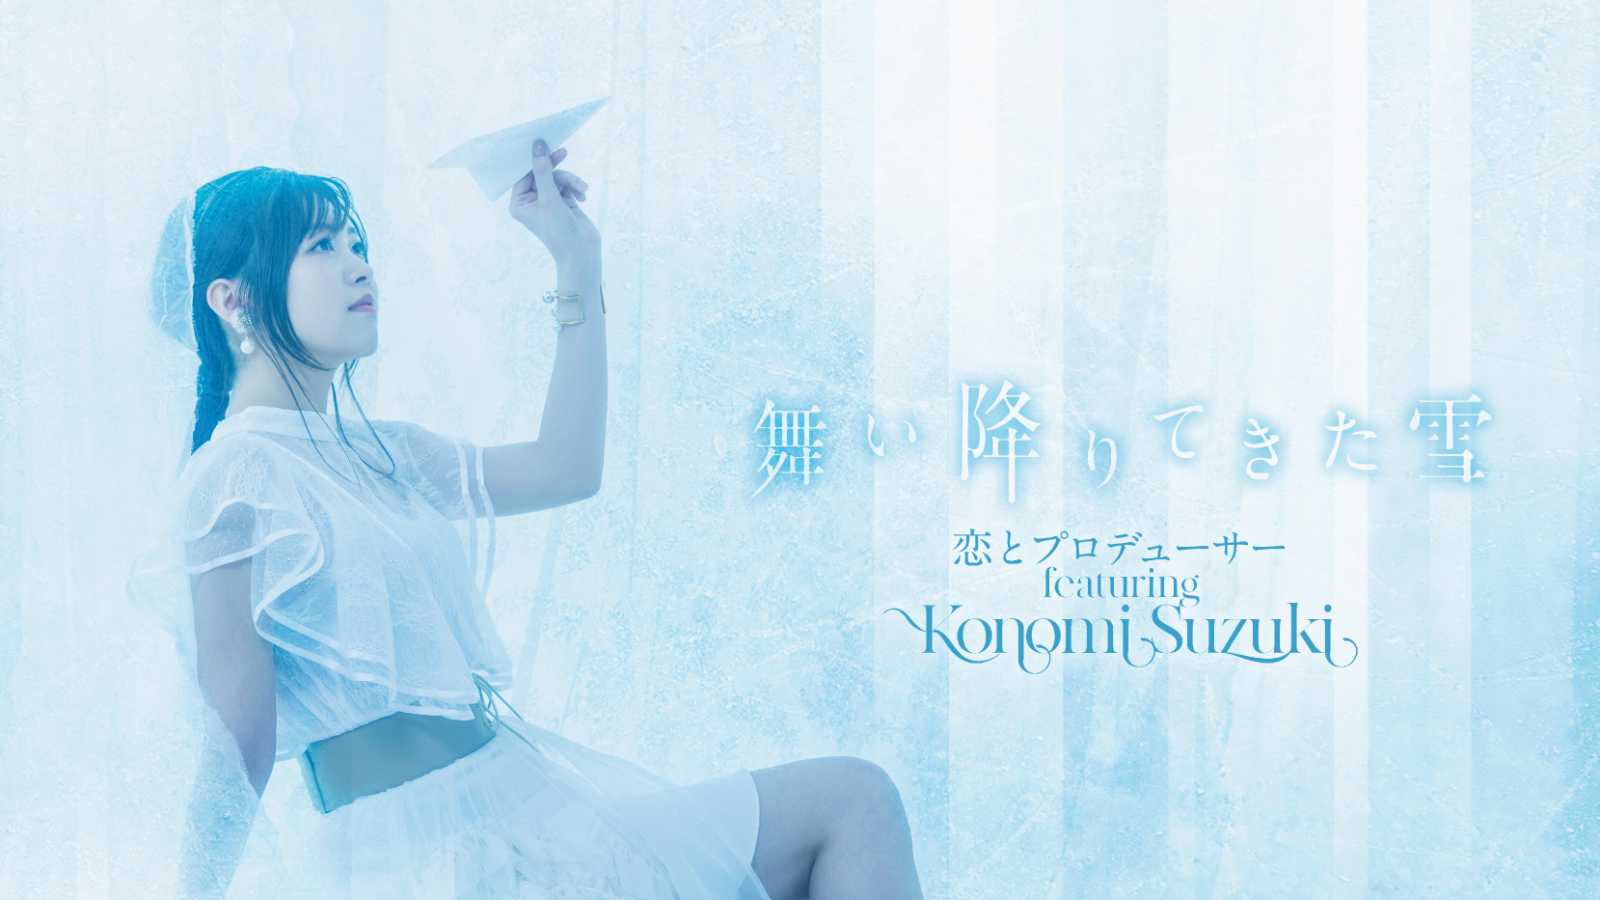 Details on Konomi Suzuki's Third Consecutive Single © Konomi Suzuki. All rights reserved.